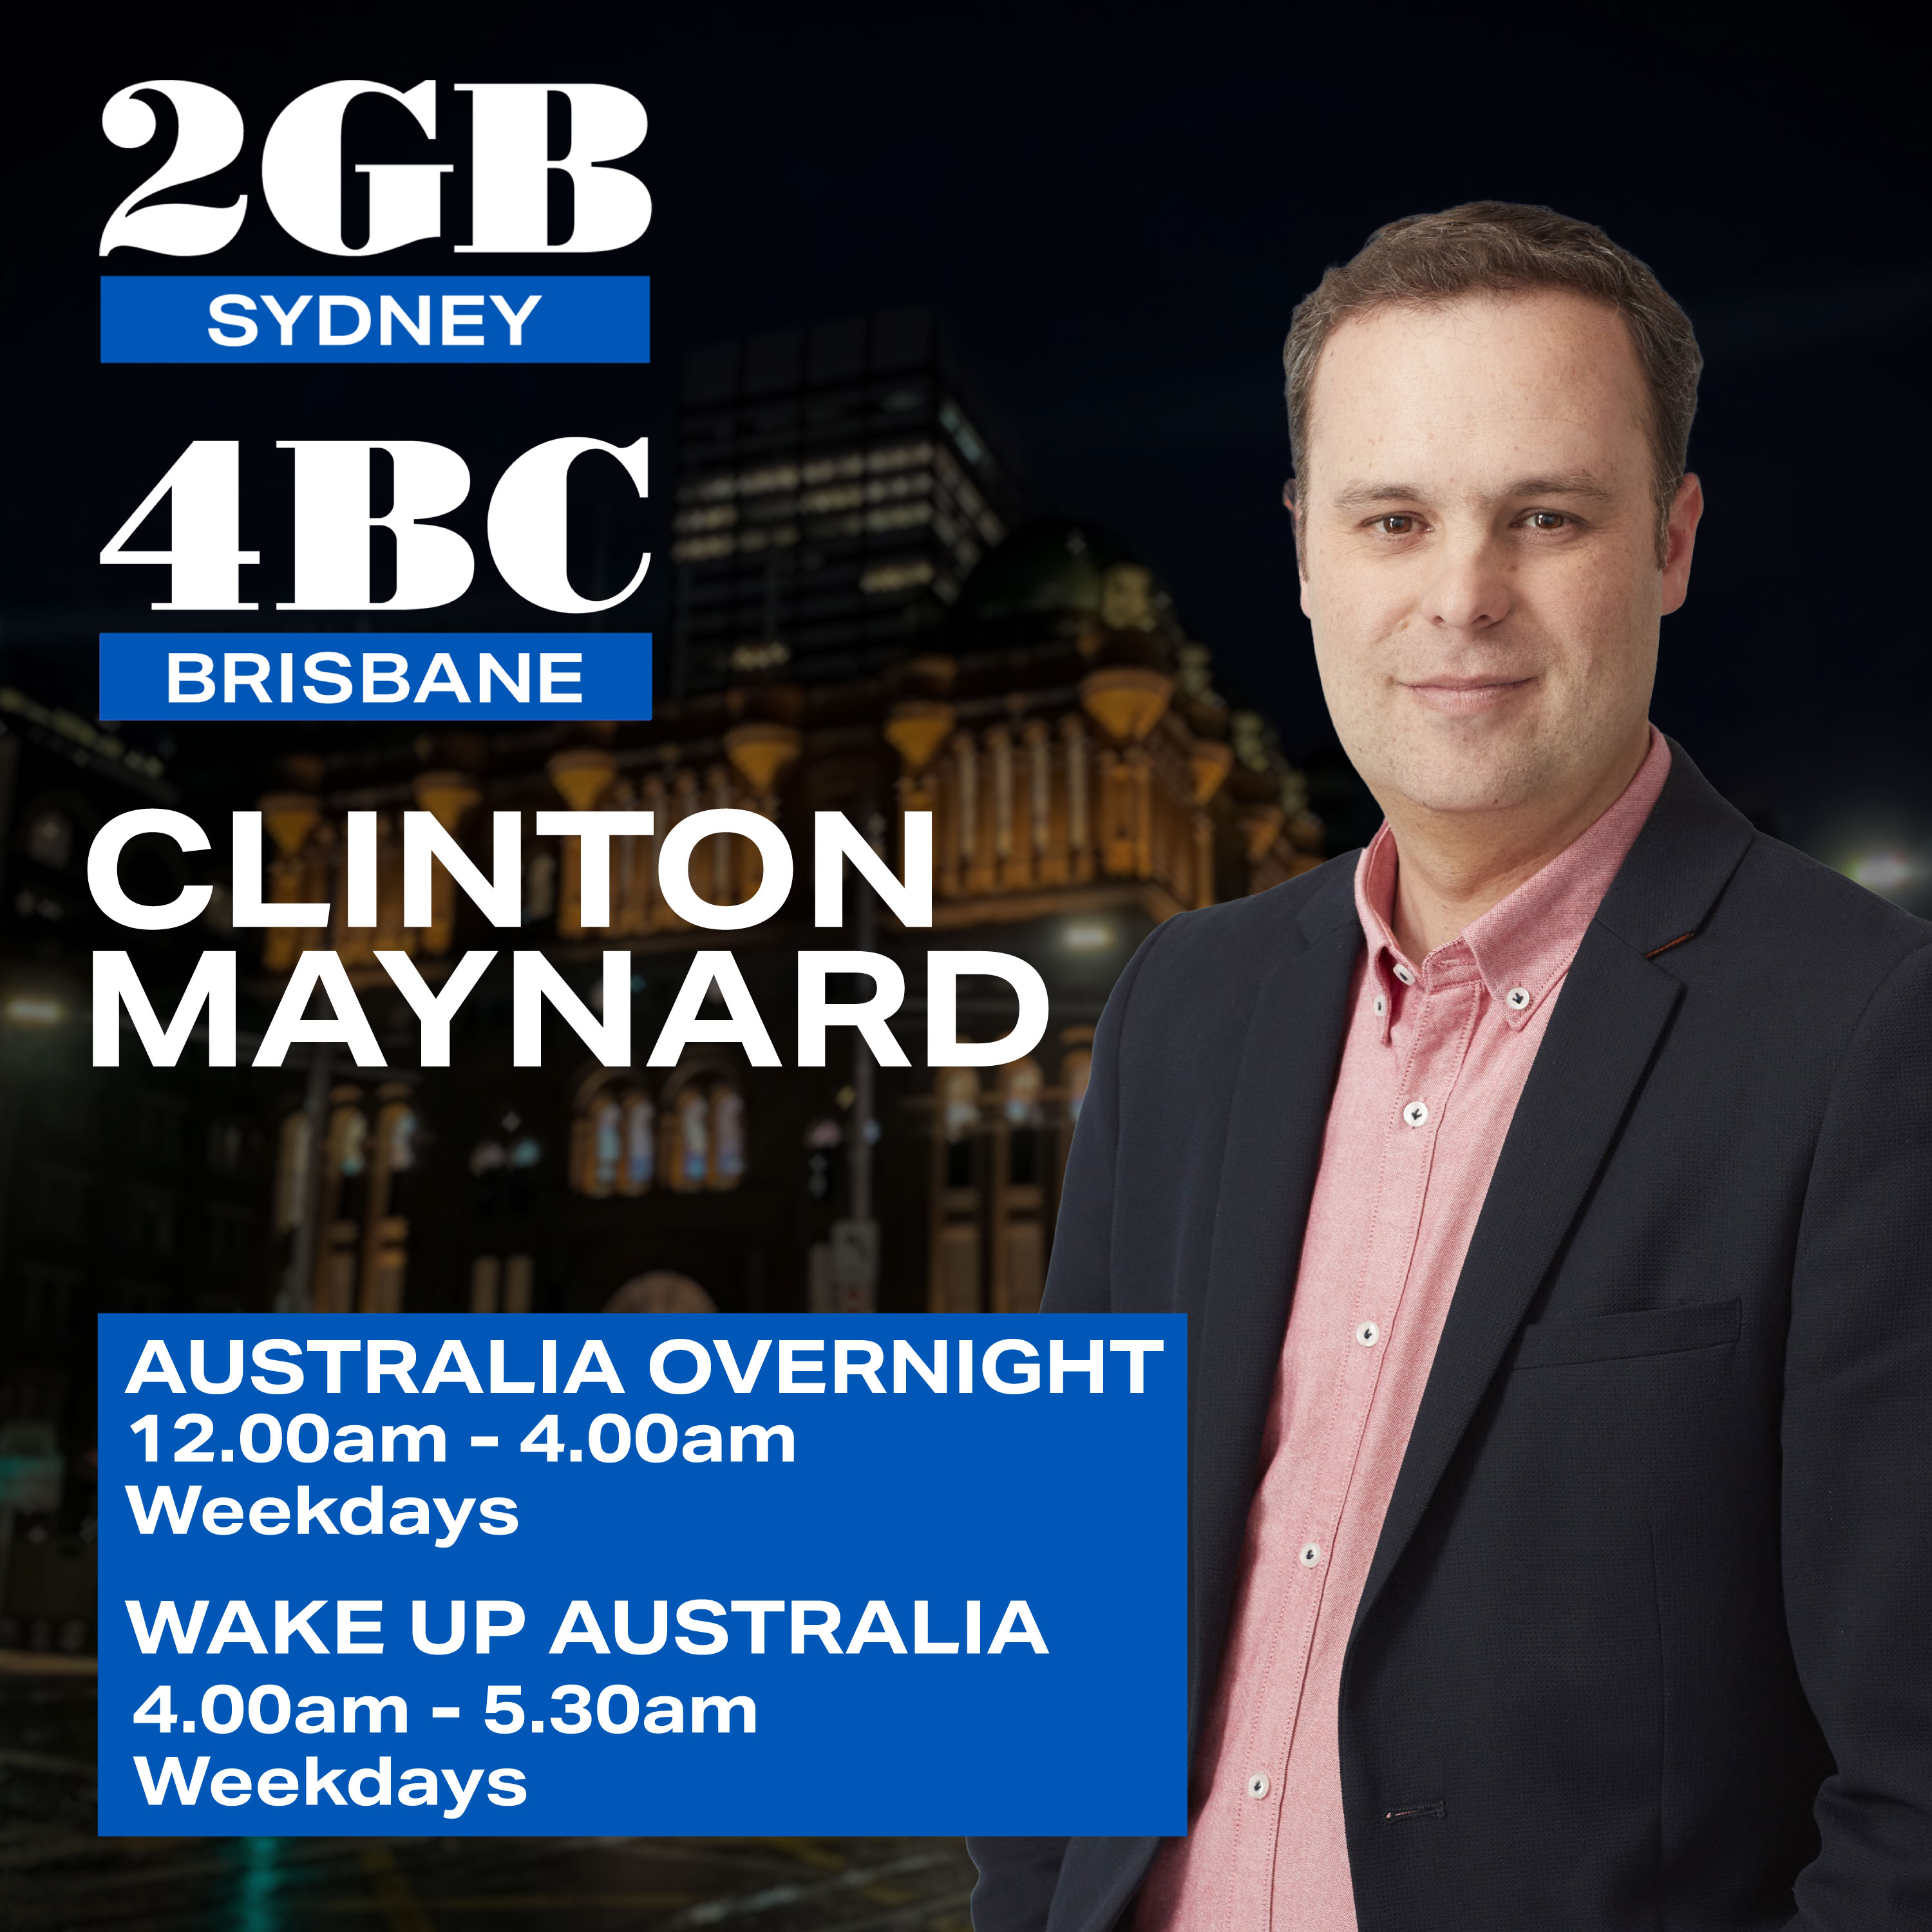 Wake Up Australia with Clinton Maynard - Tuesday 23rd of April